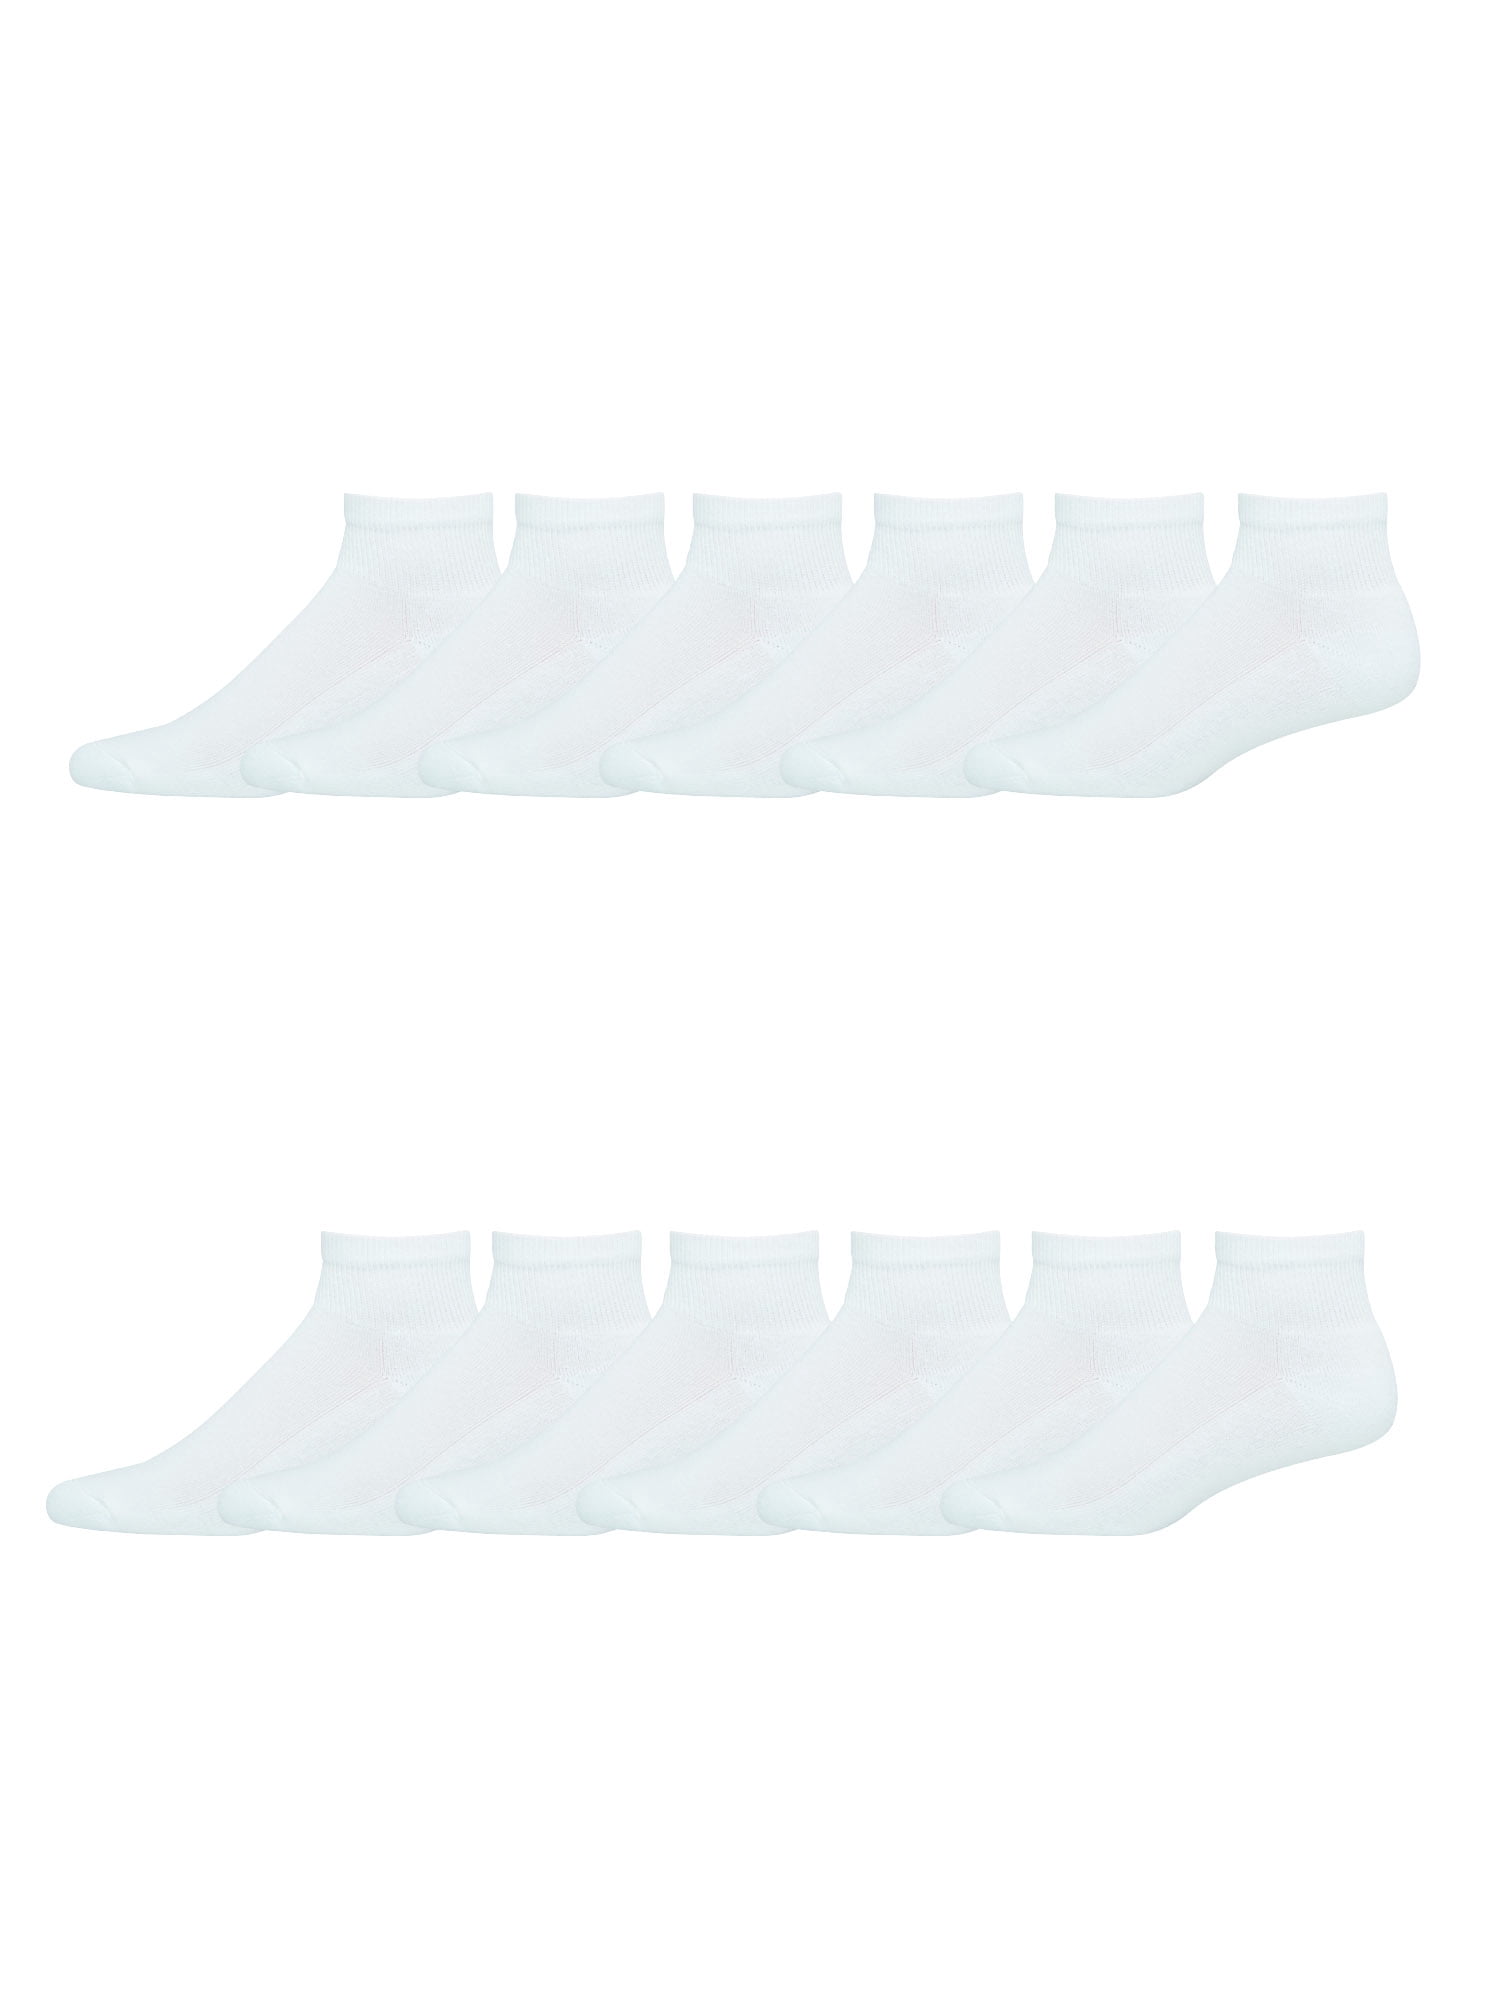 Hanes X-Temp Men's Active Cool Ankle Socks, 12 Pack - Walmart.com